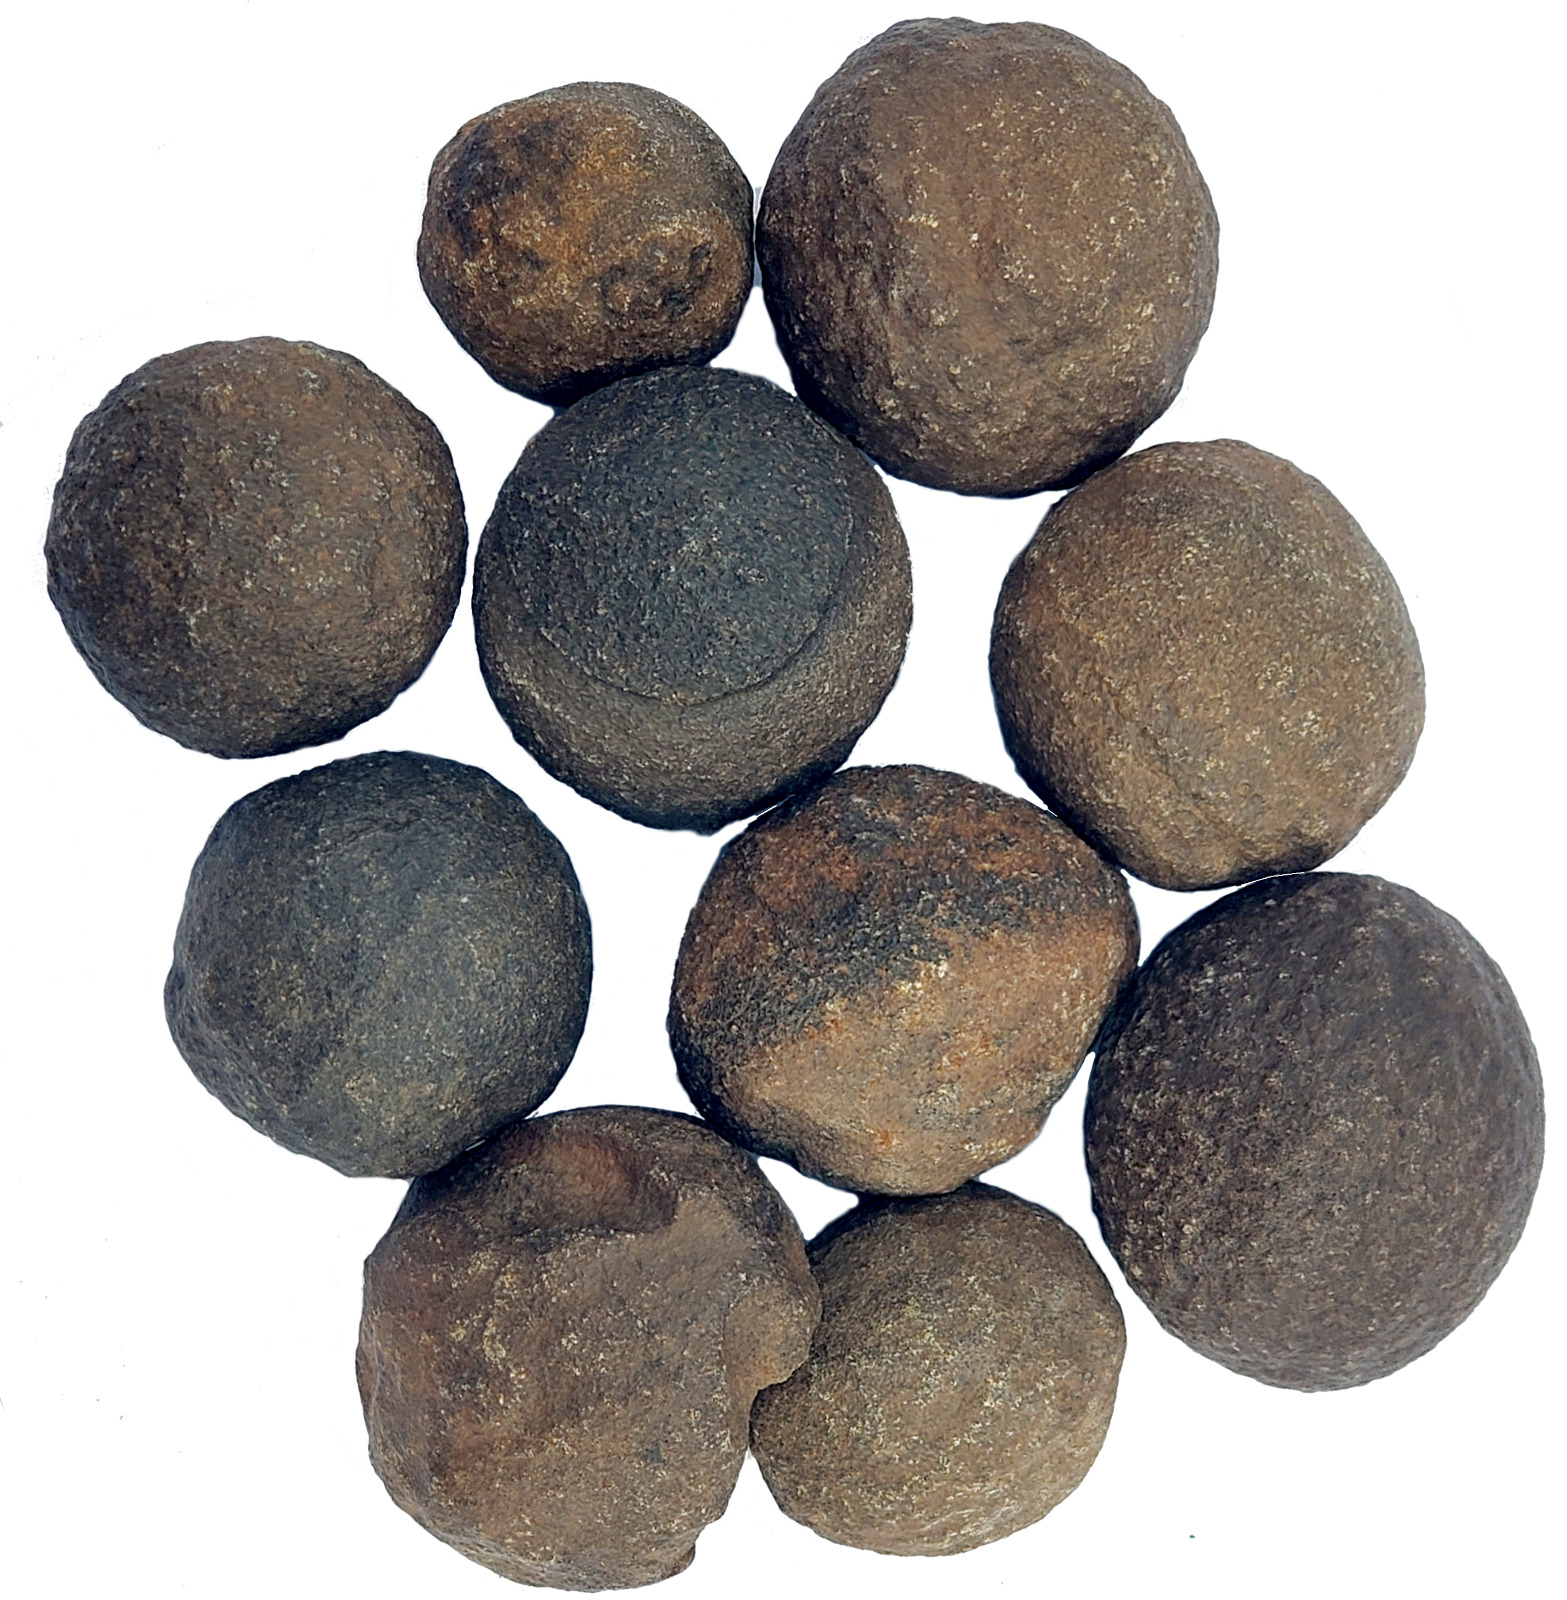 Moqui Marbles - Sandstone/Iron Concretions - 1 Pound Lot